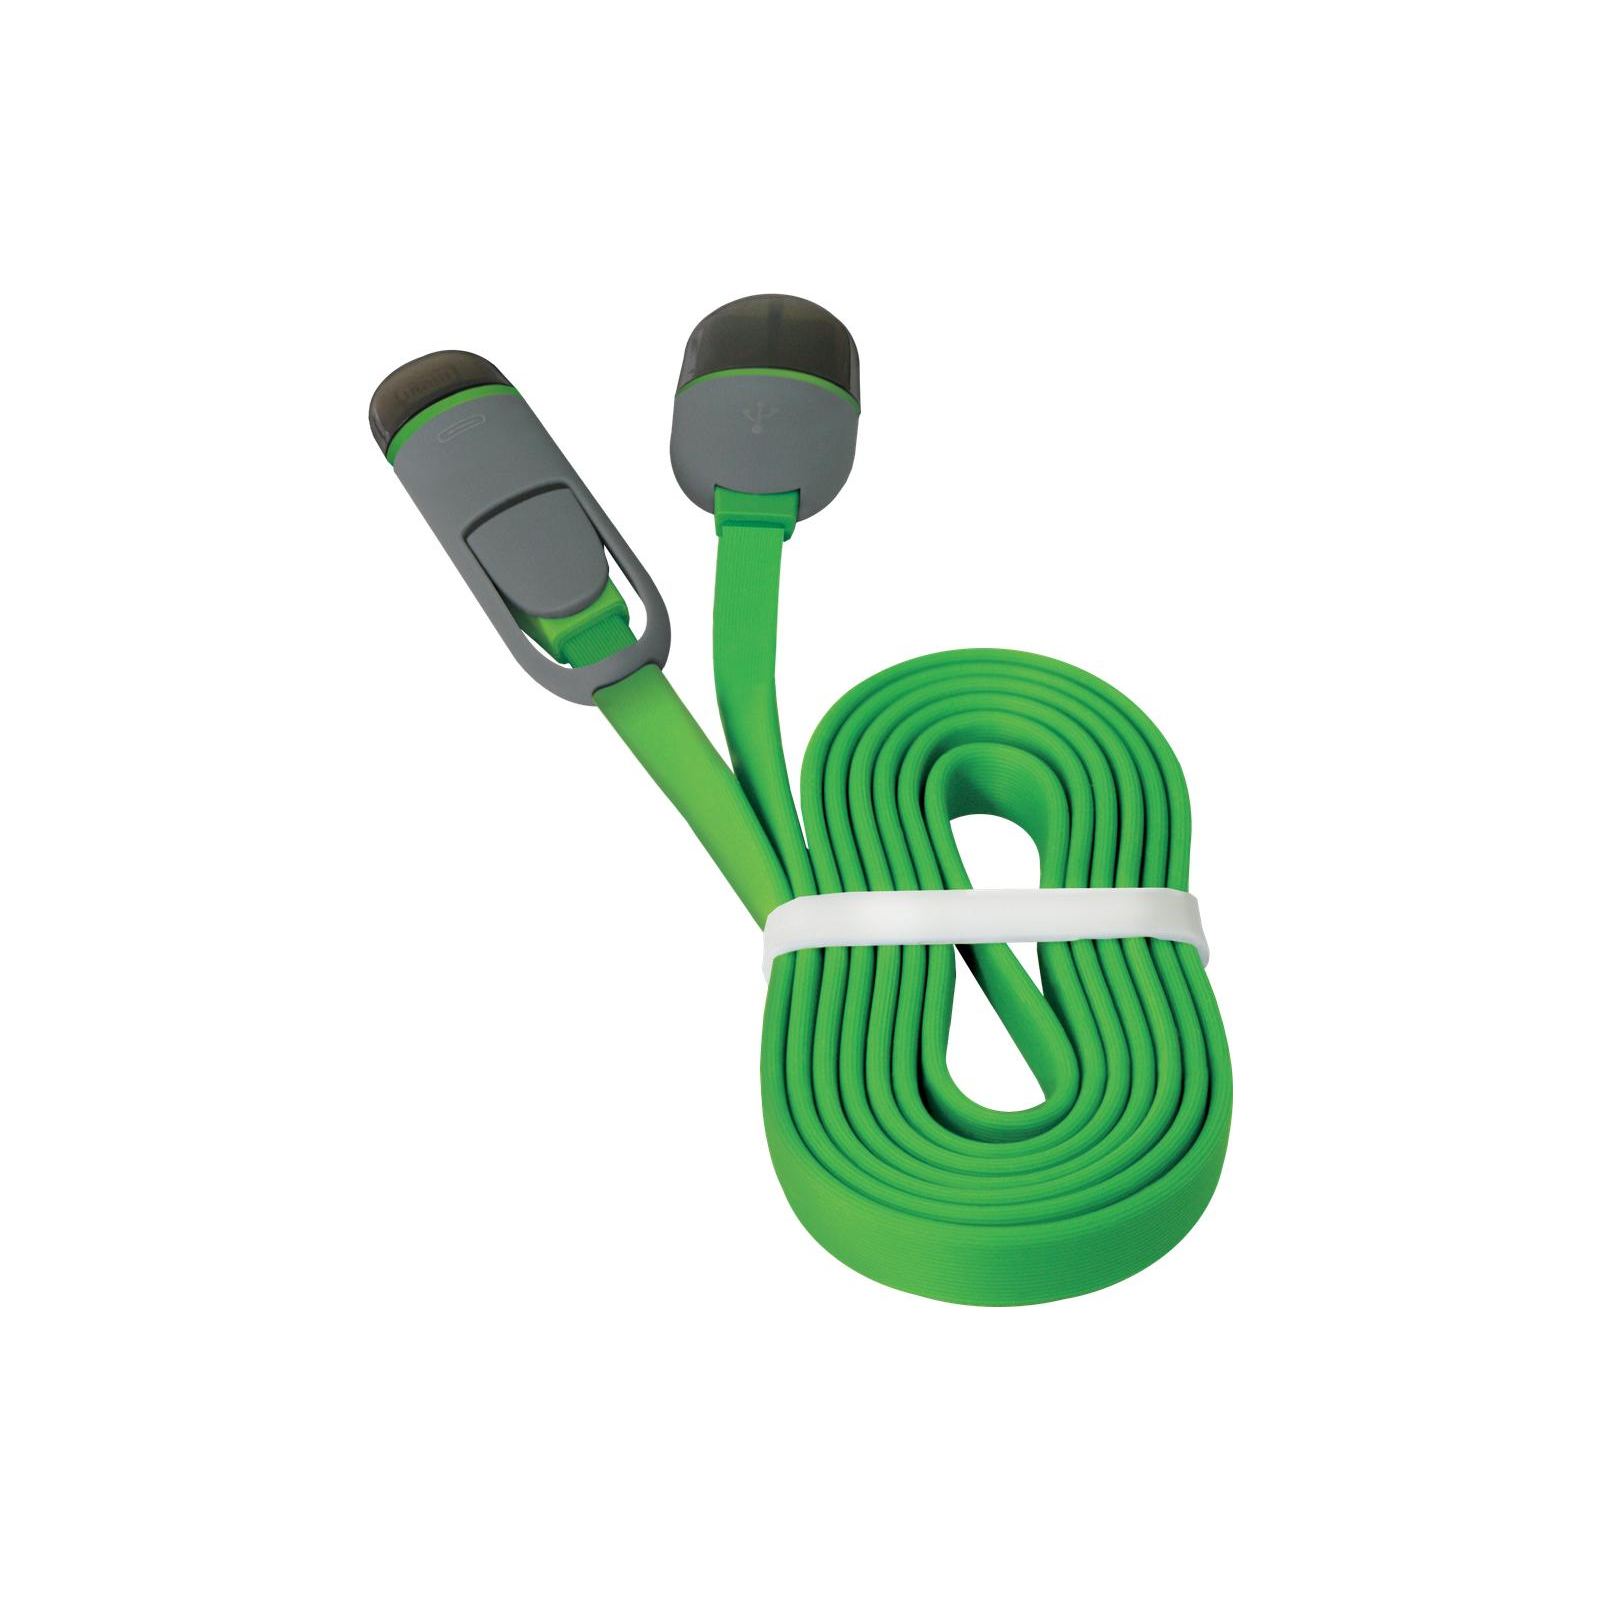 Дата кабель USB10-03BP USB - Micro USB/Lightning, white, 1m Defender (87493) изображение 3